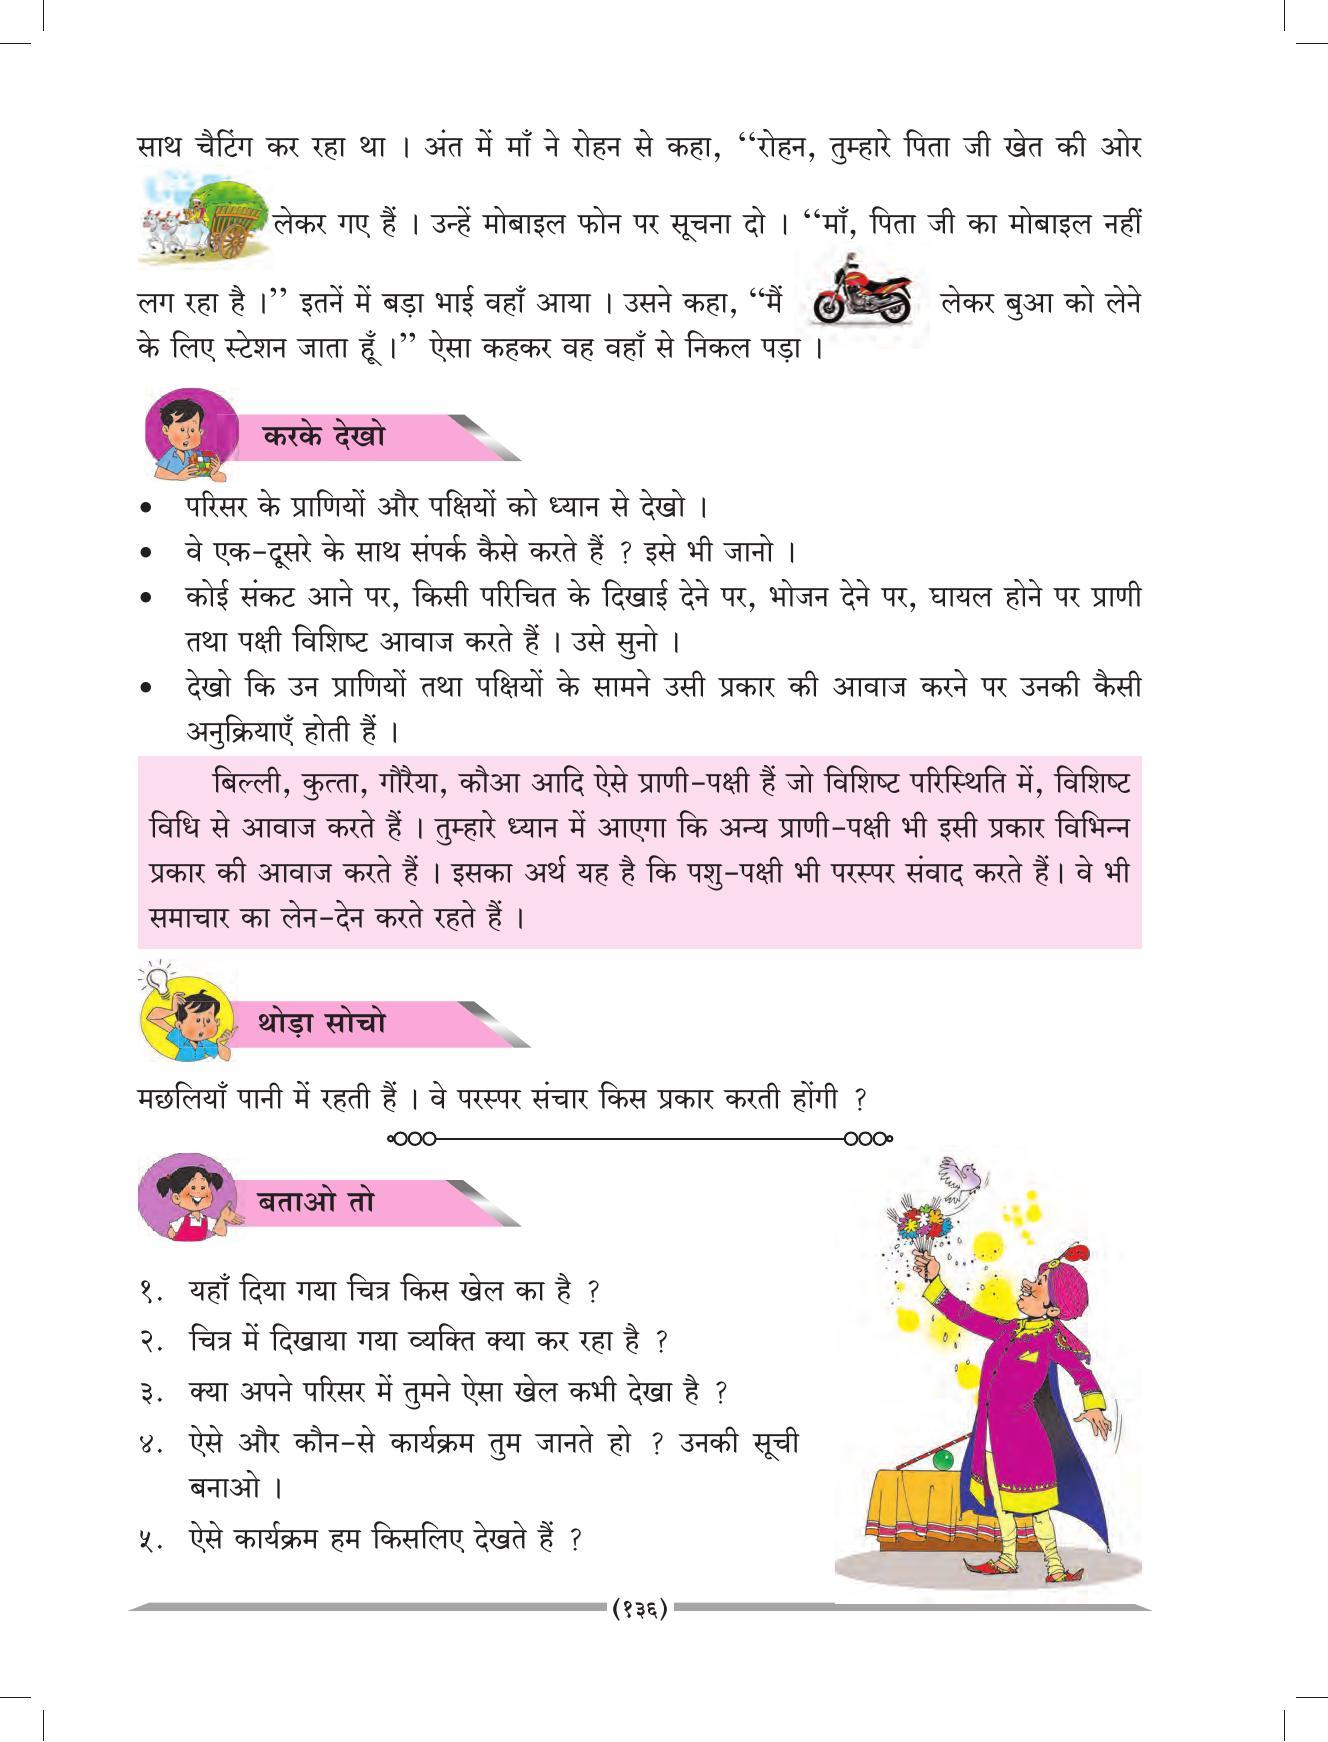 Maharashtra Board Class 4 EVS 1 (Hindi Medium) Textbook - Page 146